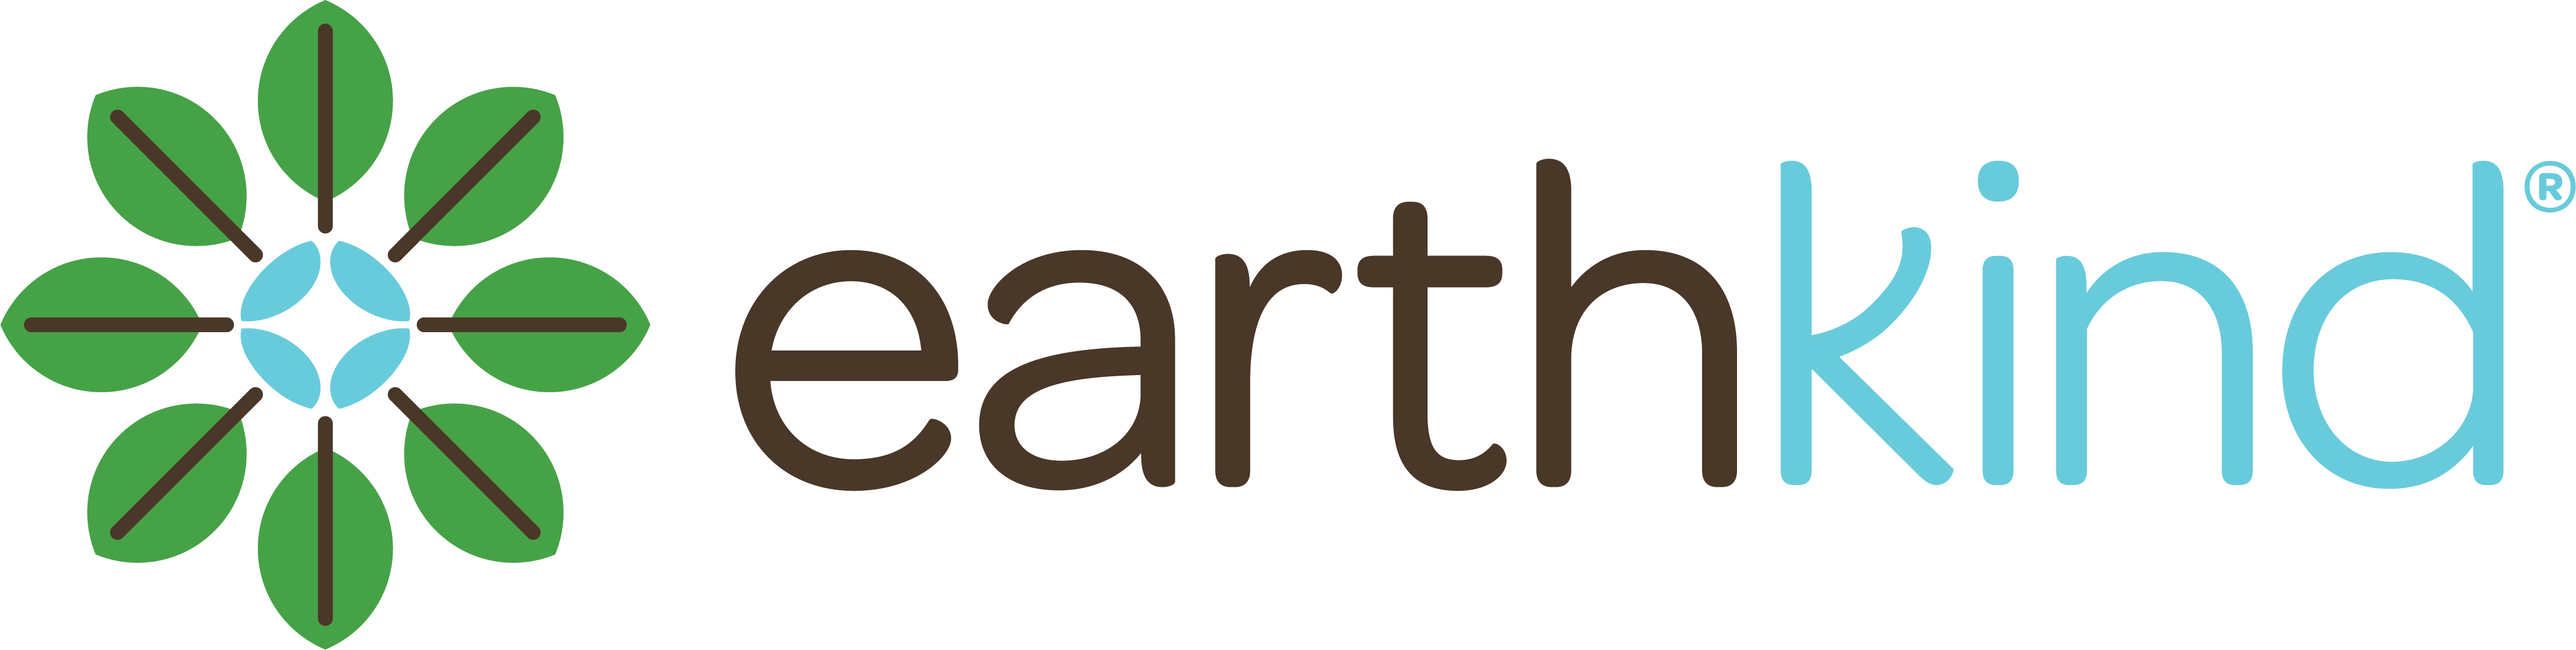 EarthKind logo